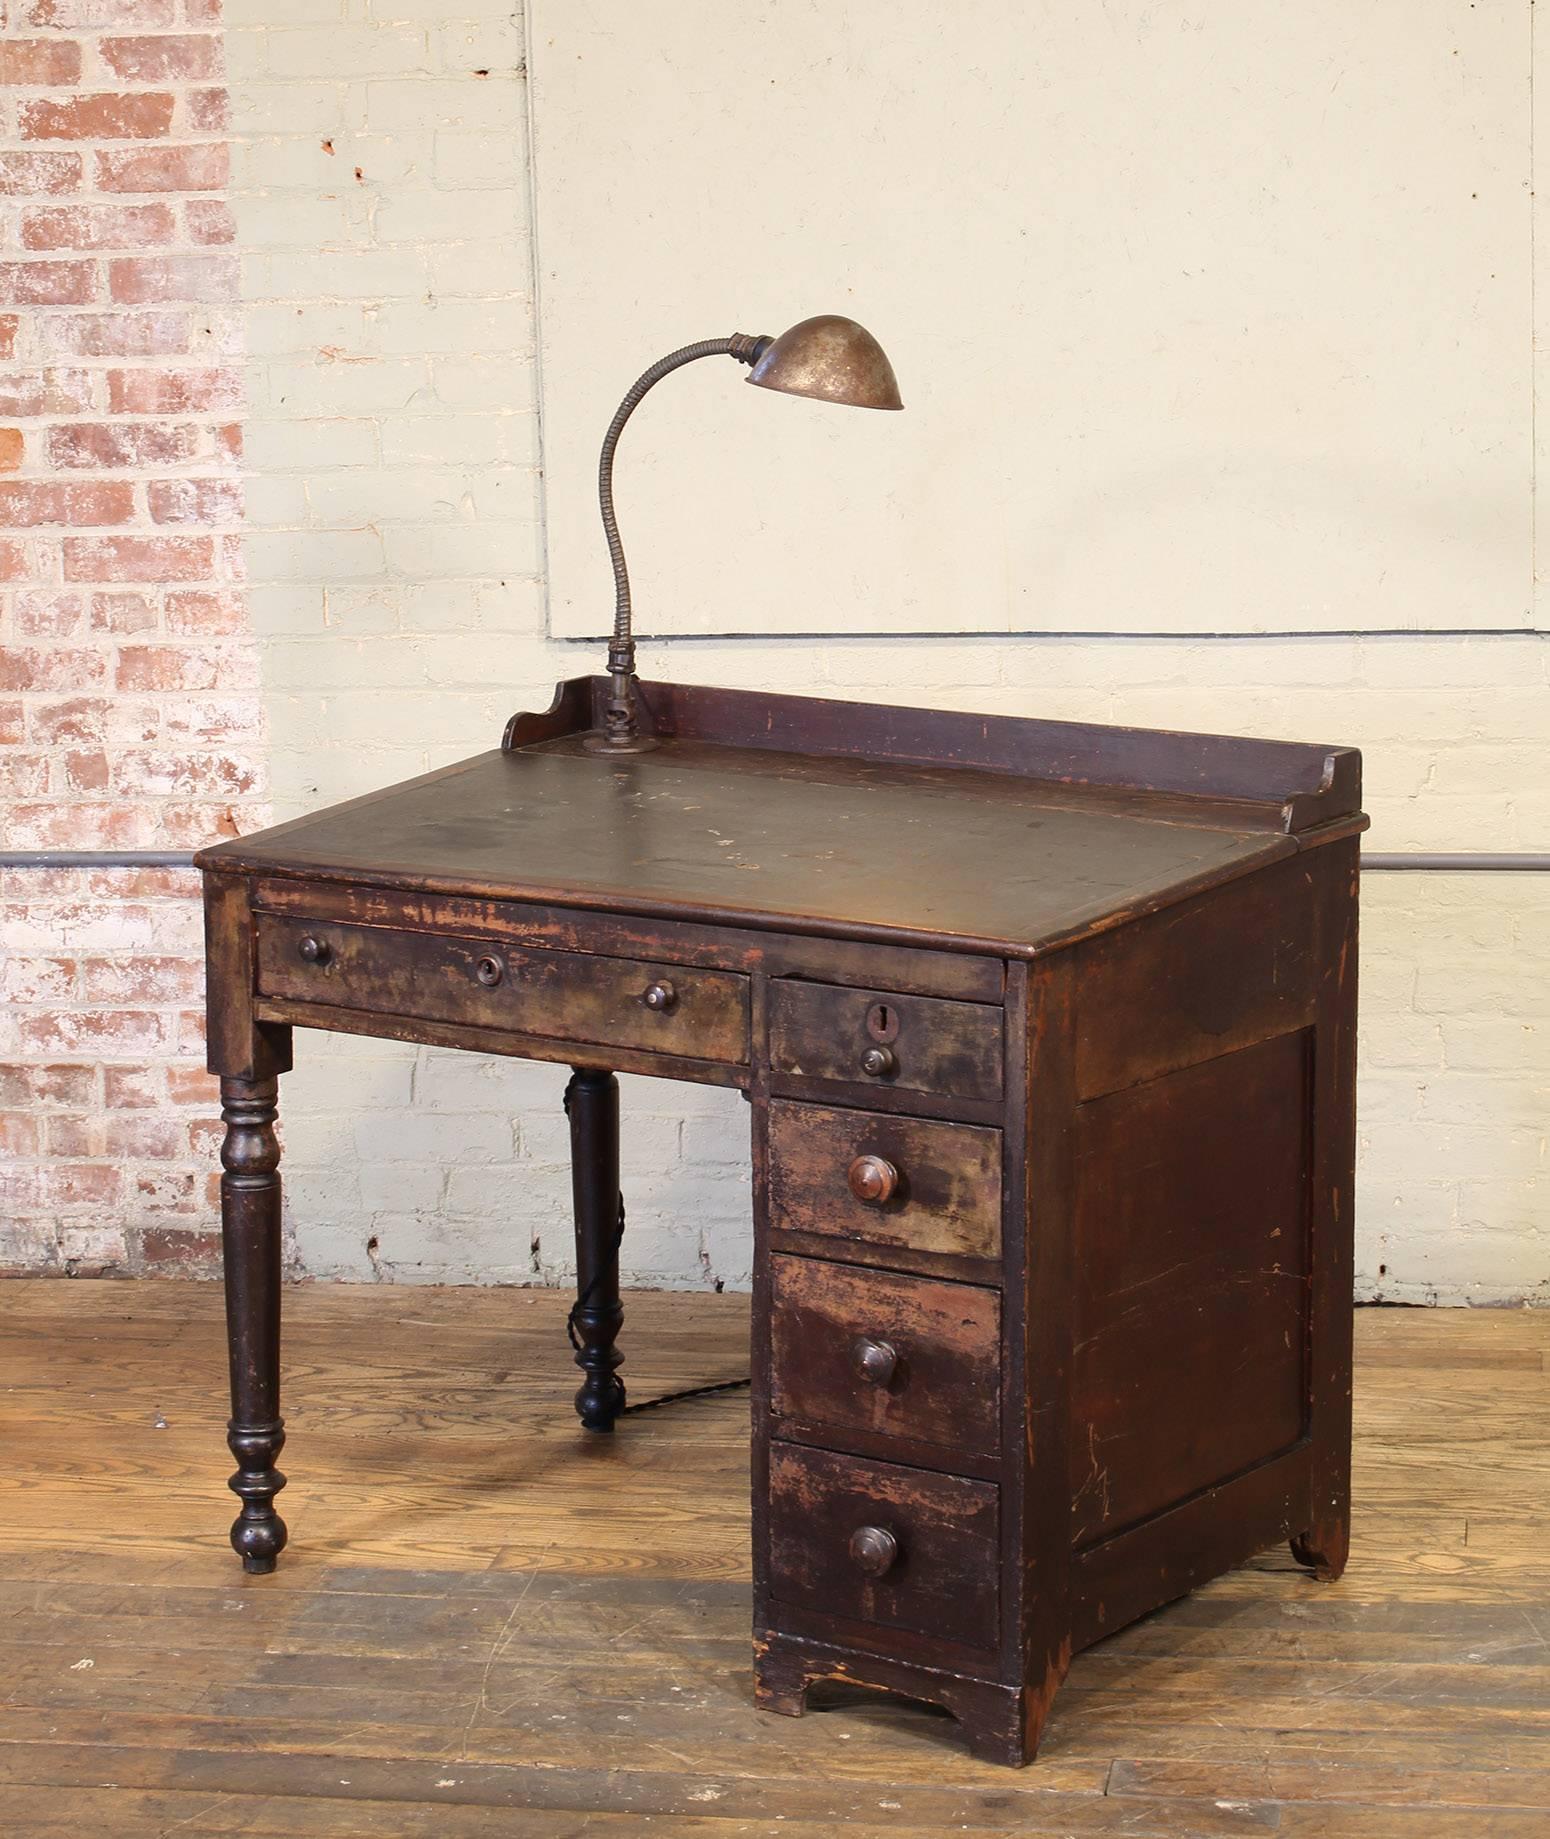 Vintage Industrial Clerk's Desk with Adjustable Task-Light In Distressed Condition In Oakville, CT